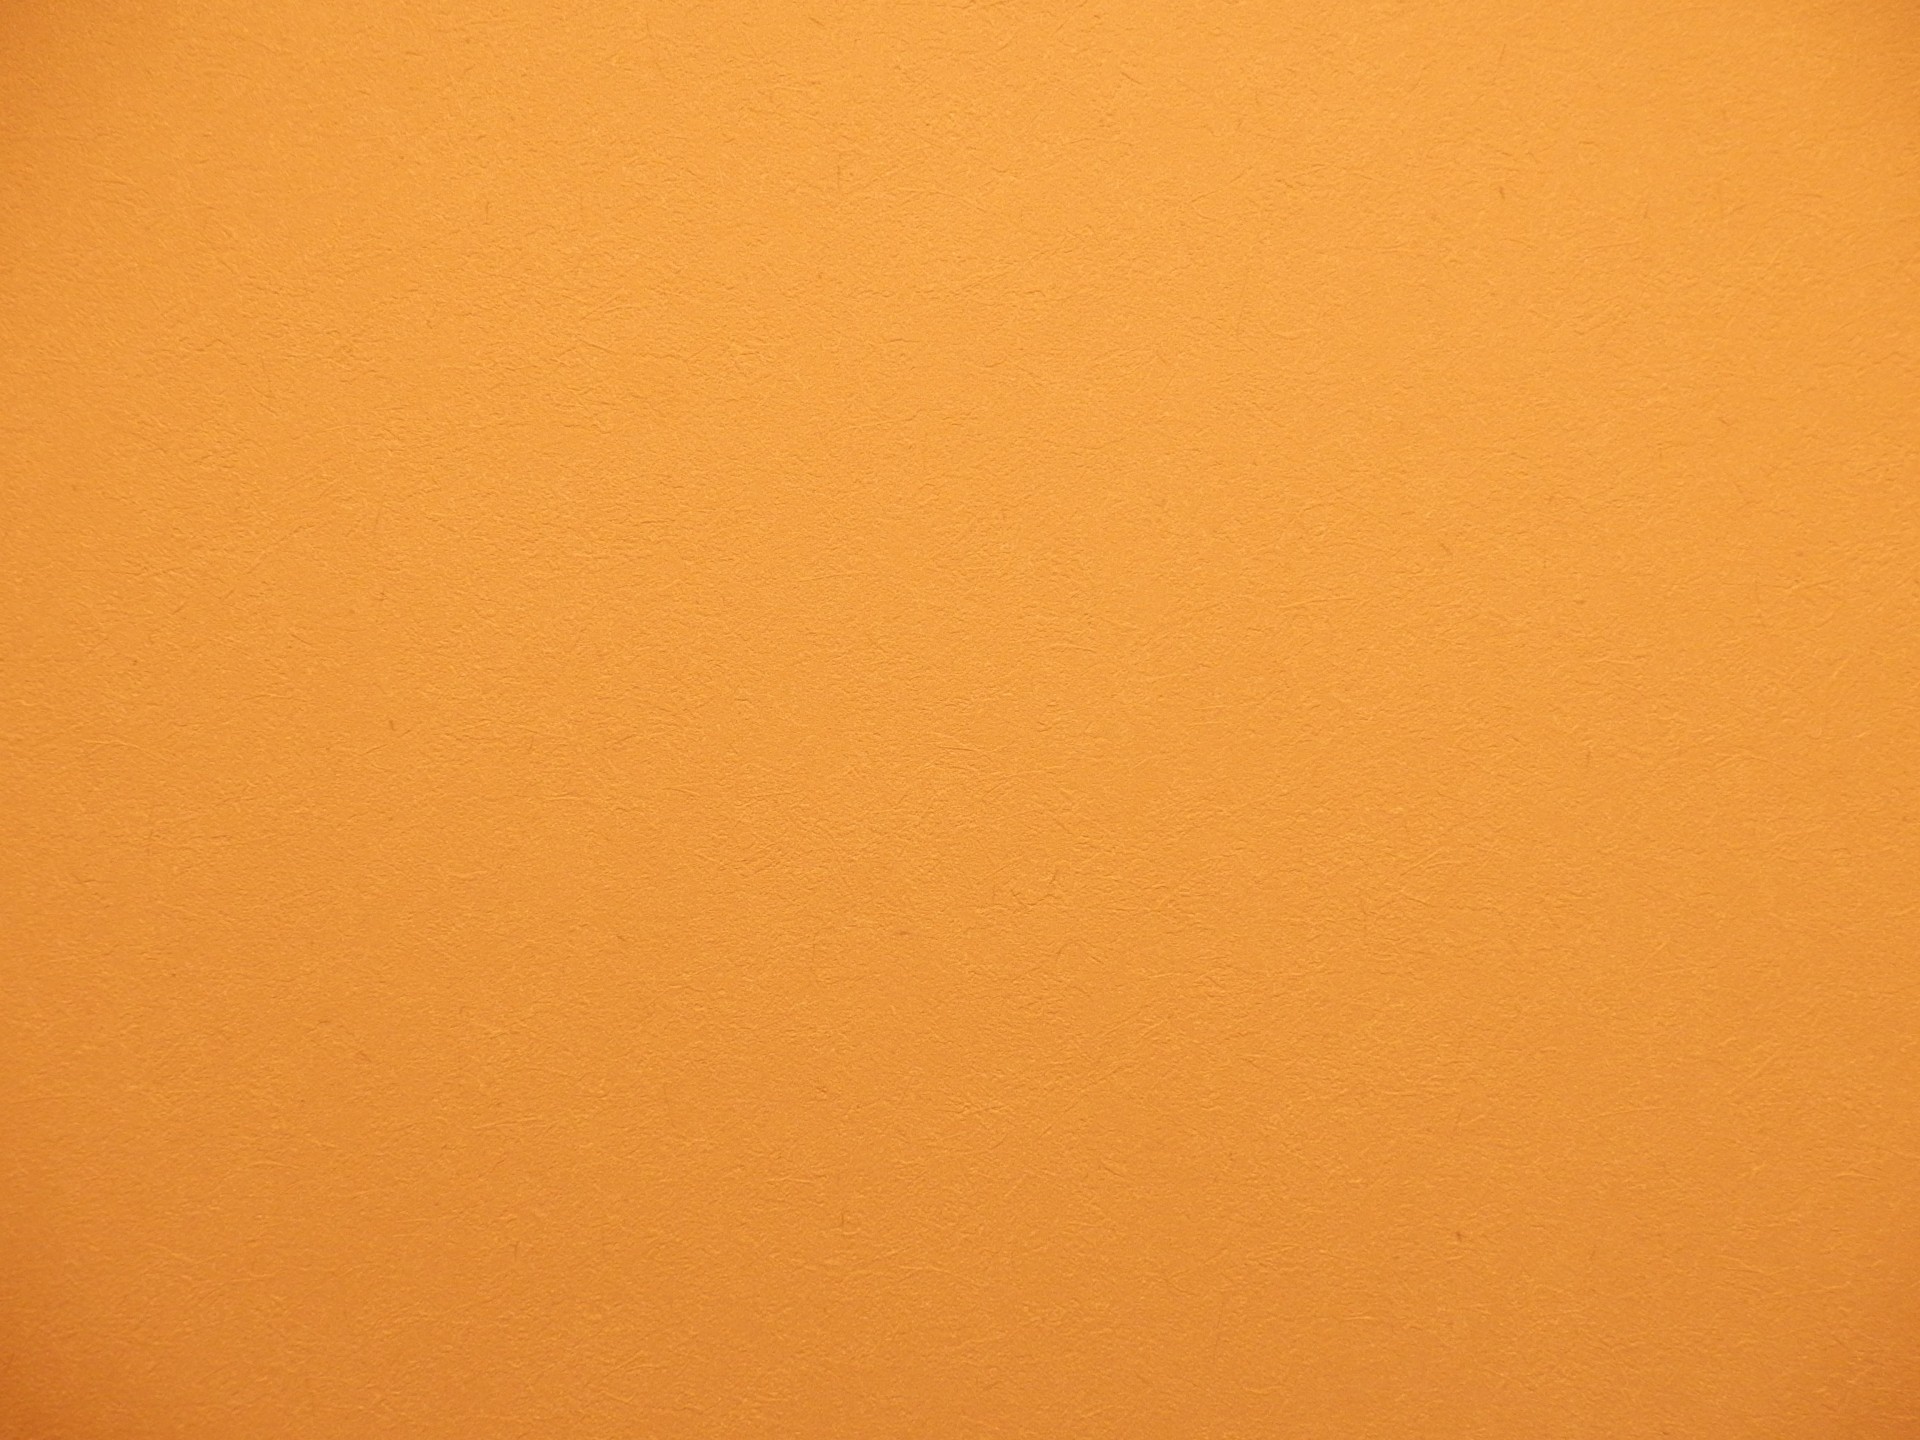 Orange Wall Texture